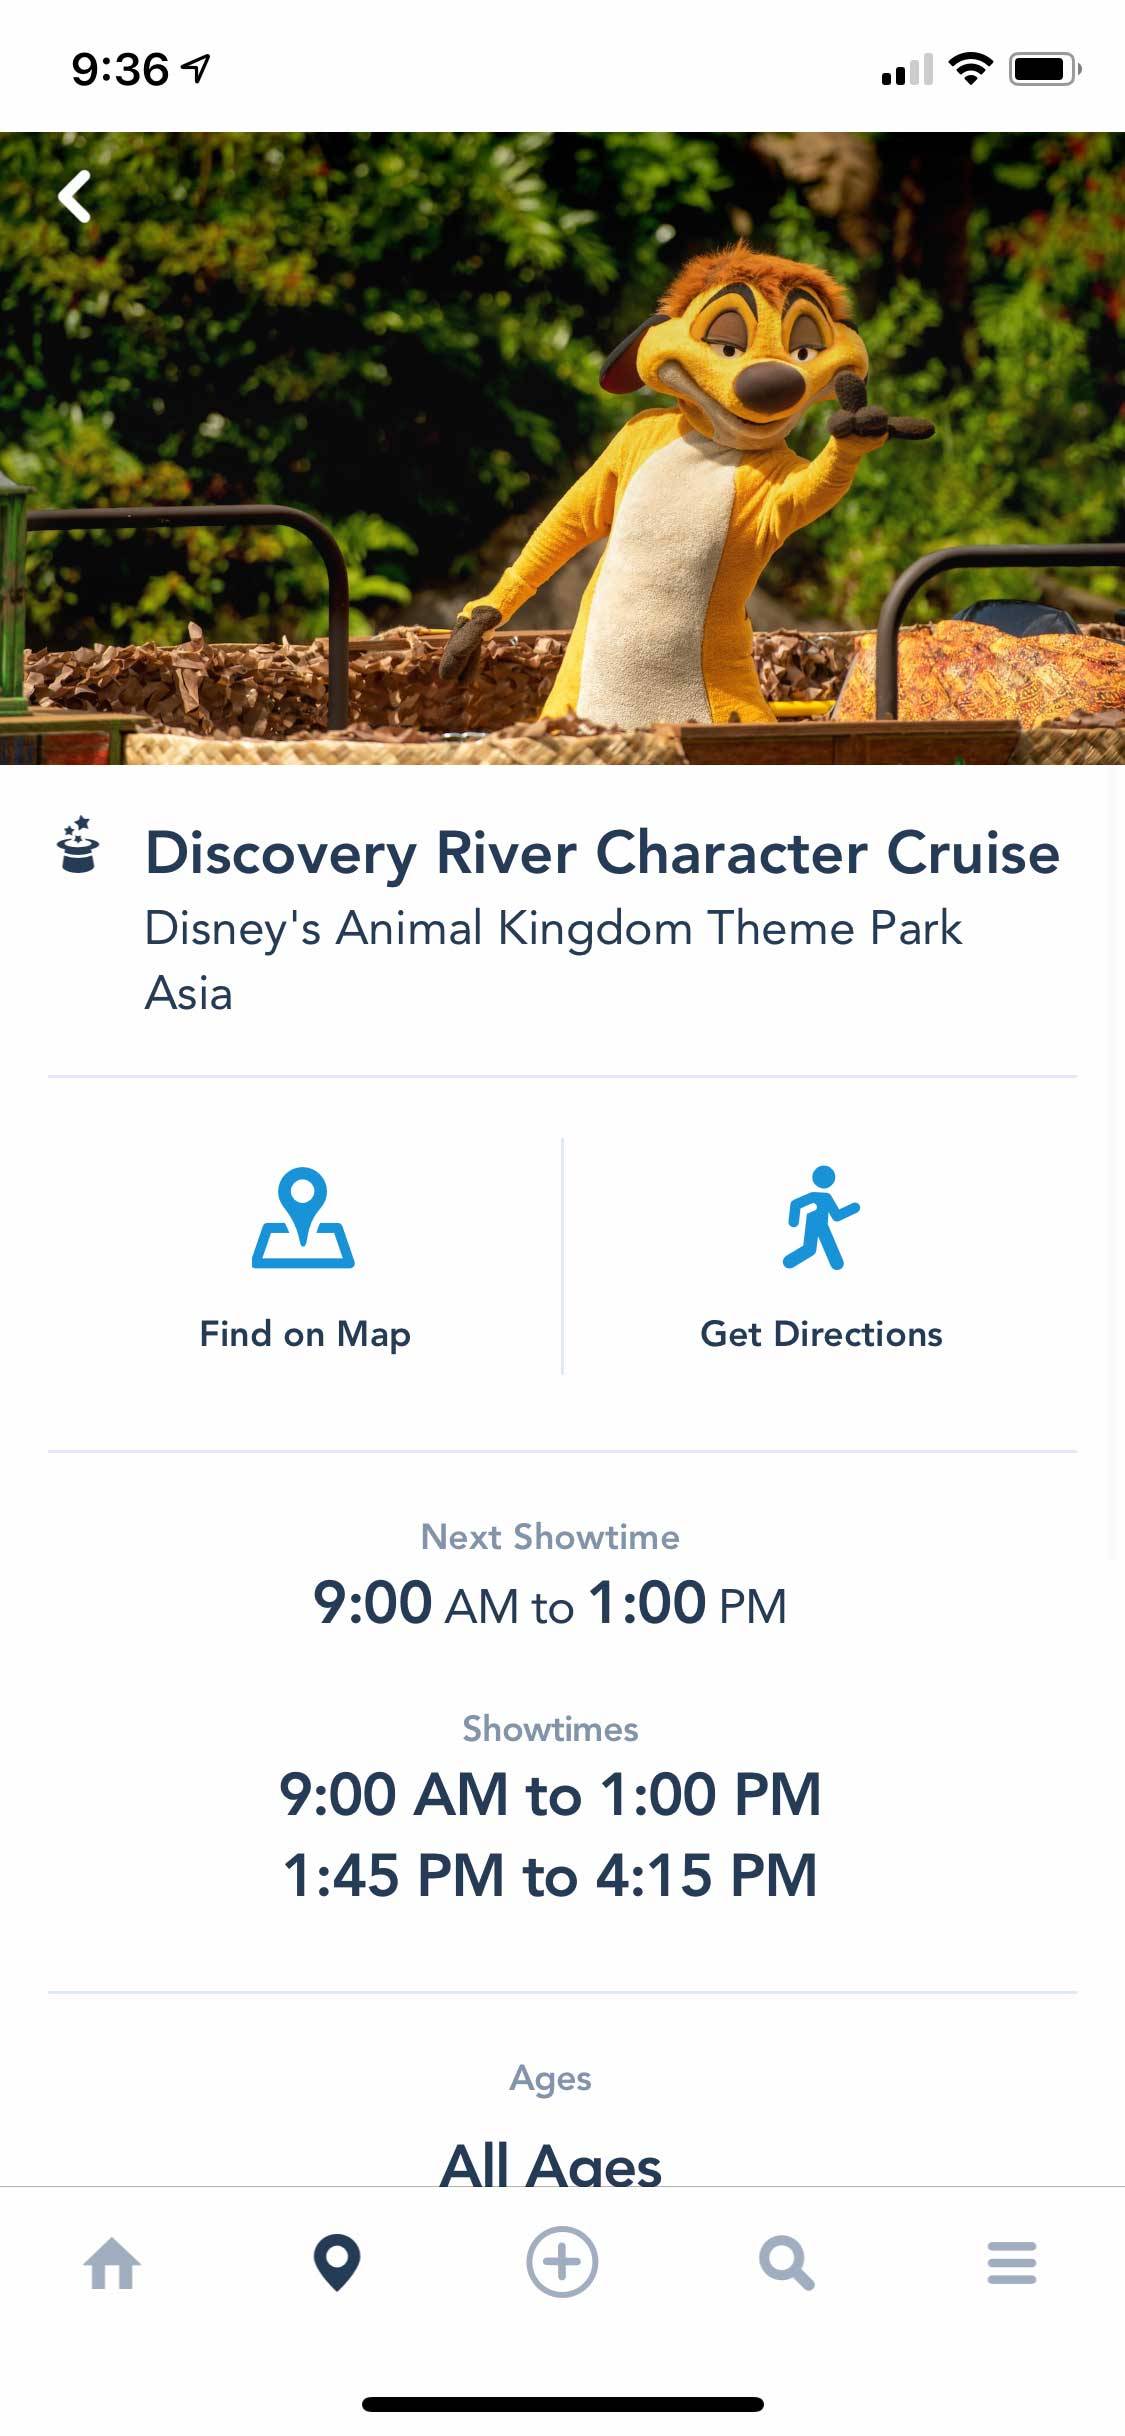 Discovery River Cruise flotilla showtimes